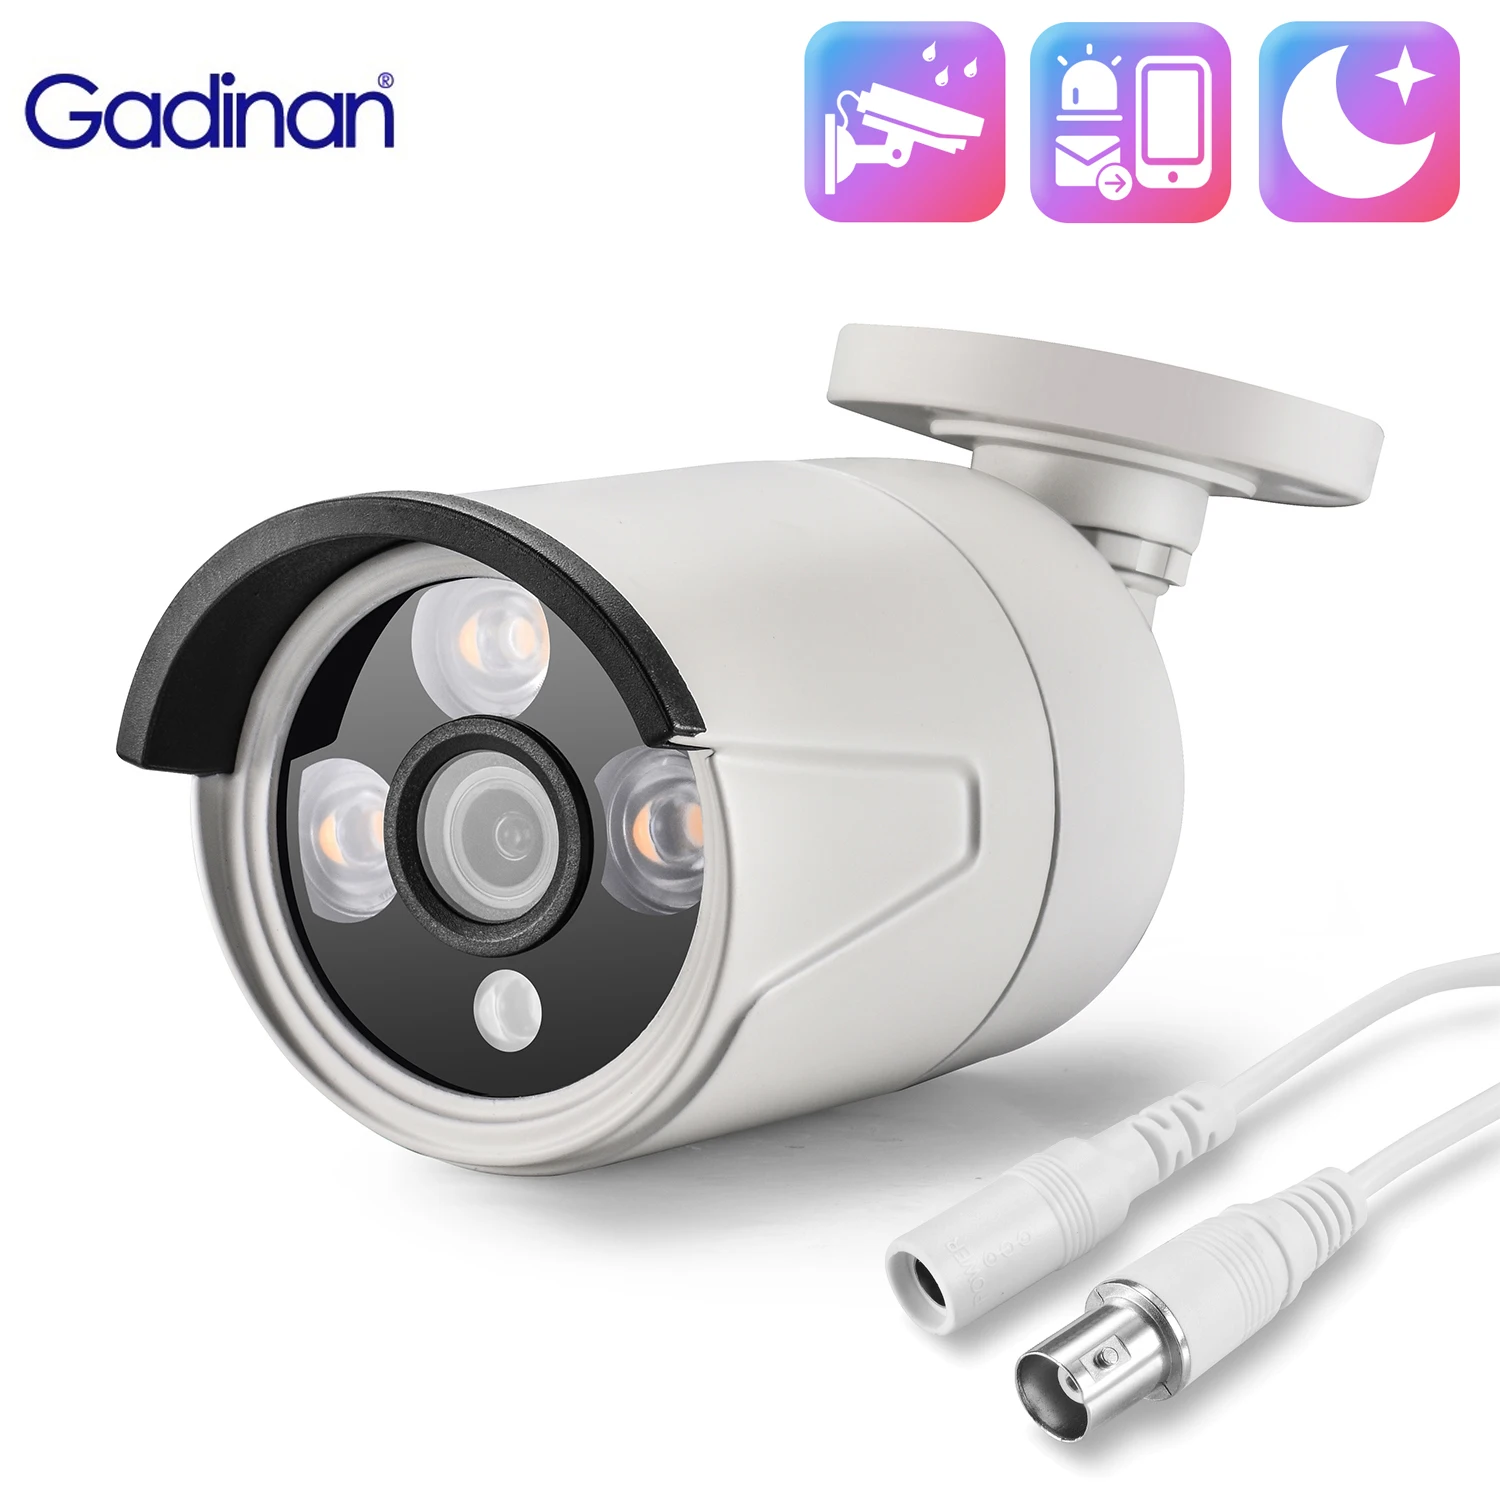 

Gadinan AHD 2MP 5MP Metal Bullet Camera 6pcs IR Leds Video Surveillance Night Vision Outdoor CCTV Wired Video Surveillance XMeye